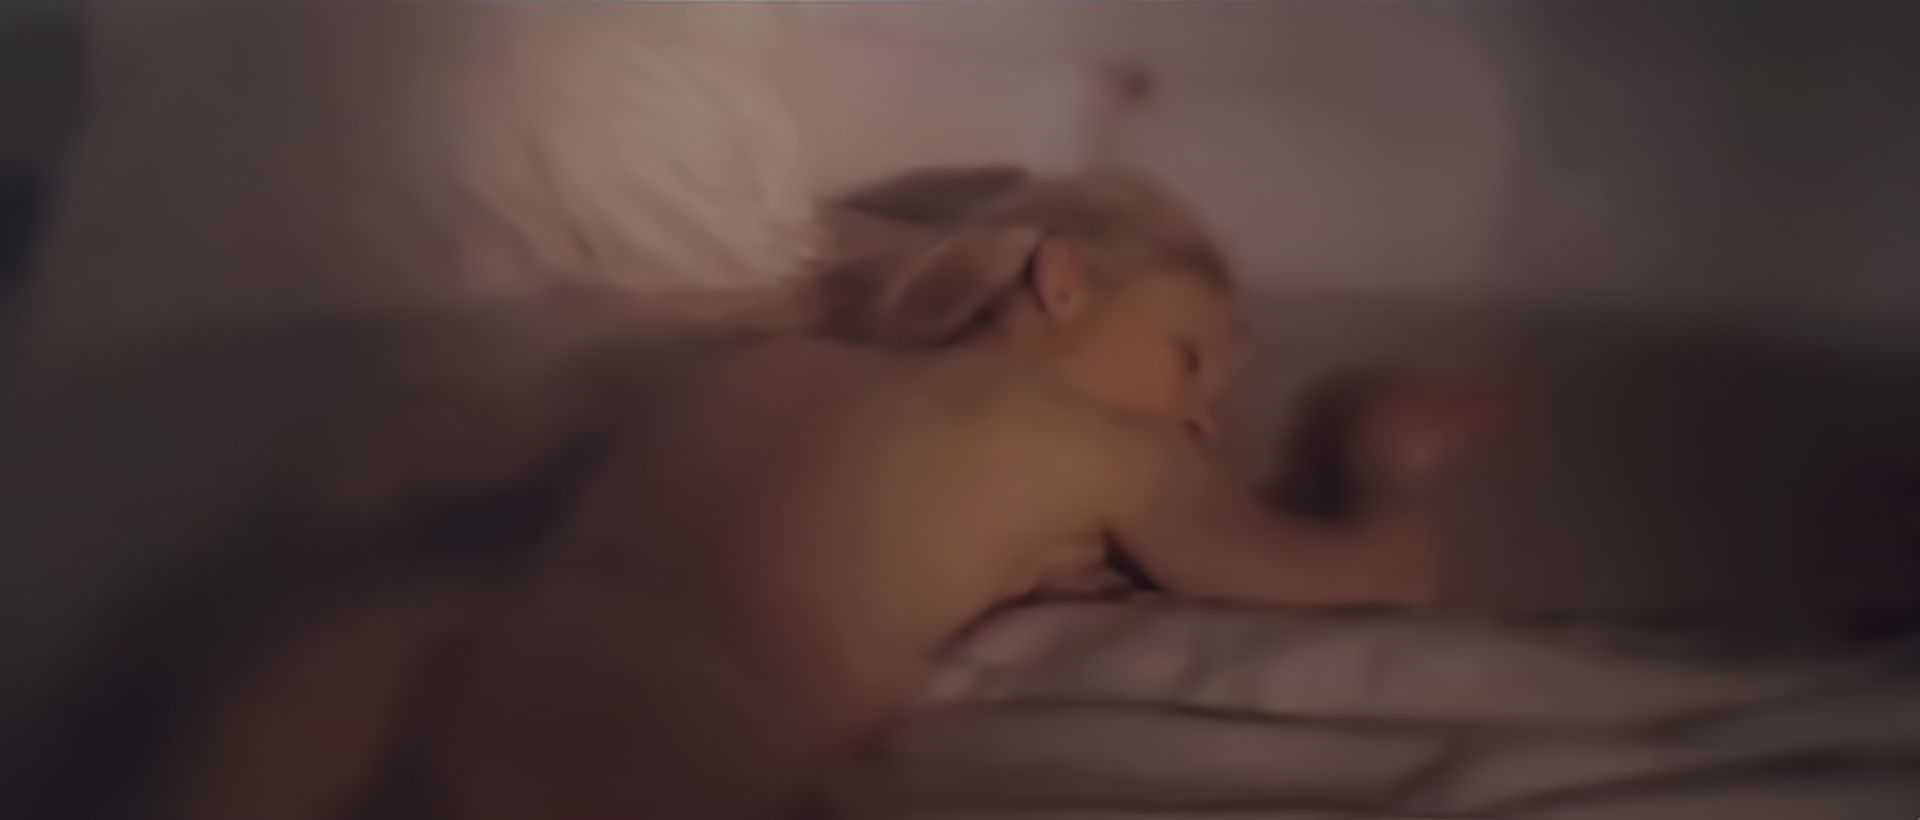 Sandra Borgmann Nude  - Jung, blond, tot: Julia Durant ermittelt (12 Pics + Video)